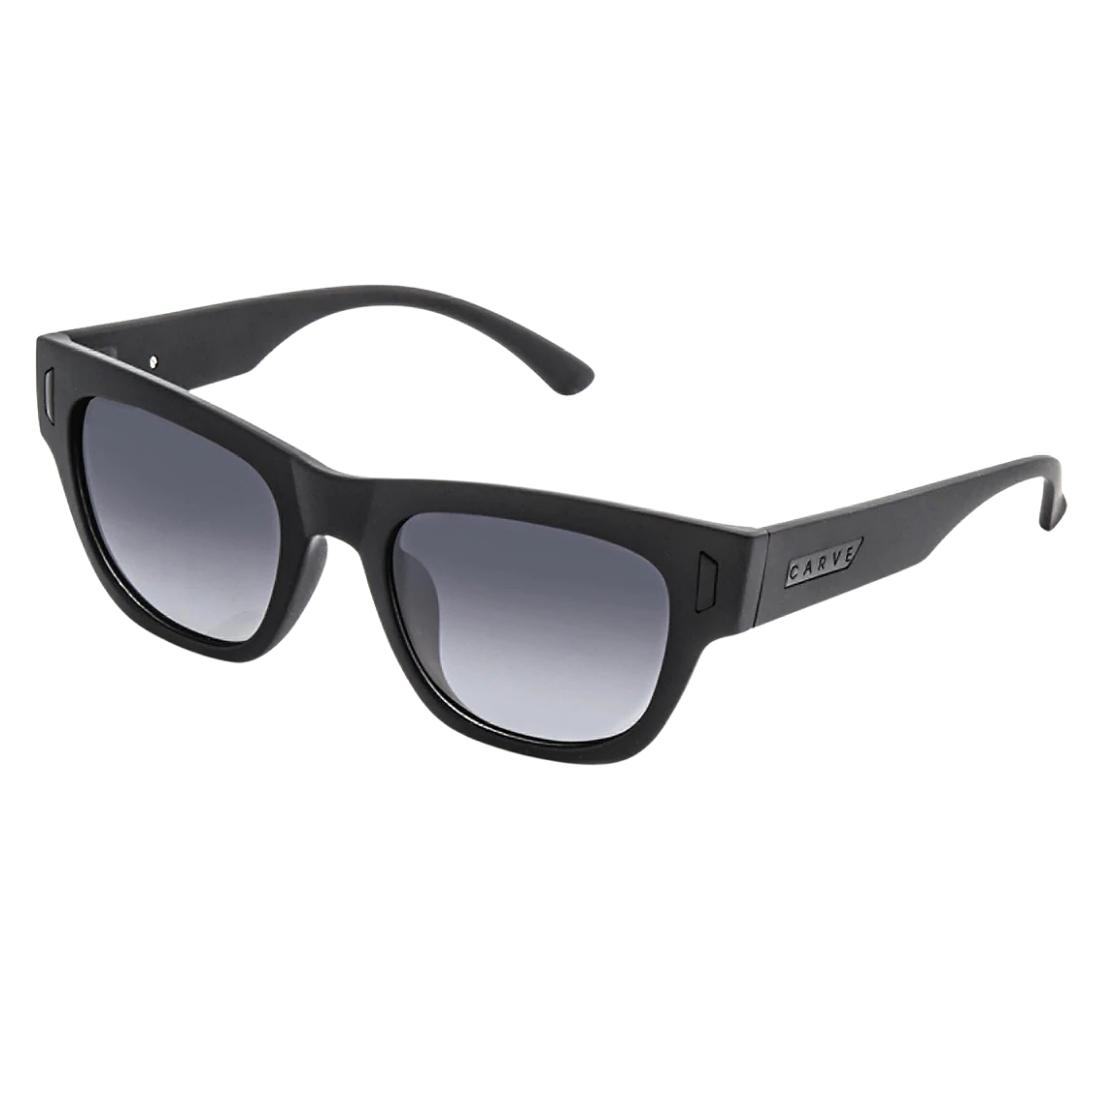 Carve Marley Casino Collection Polarised Sunglasses - Matt Black Grey Polarized - Square/Rectangular Sunglasses by Carve